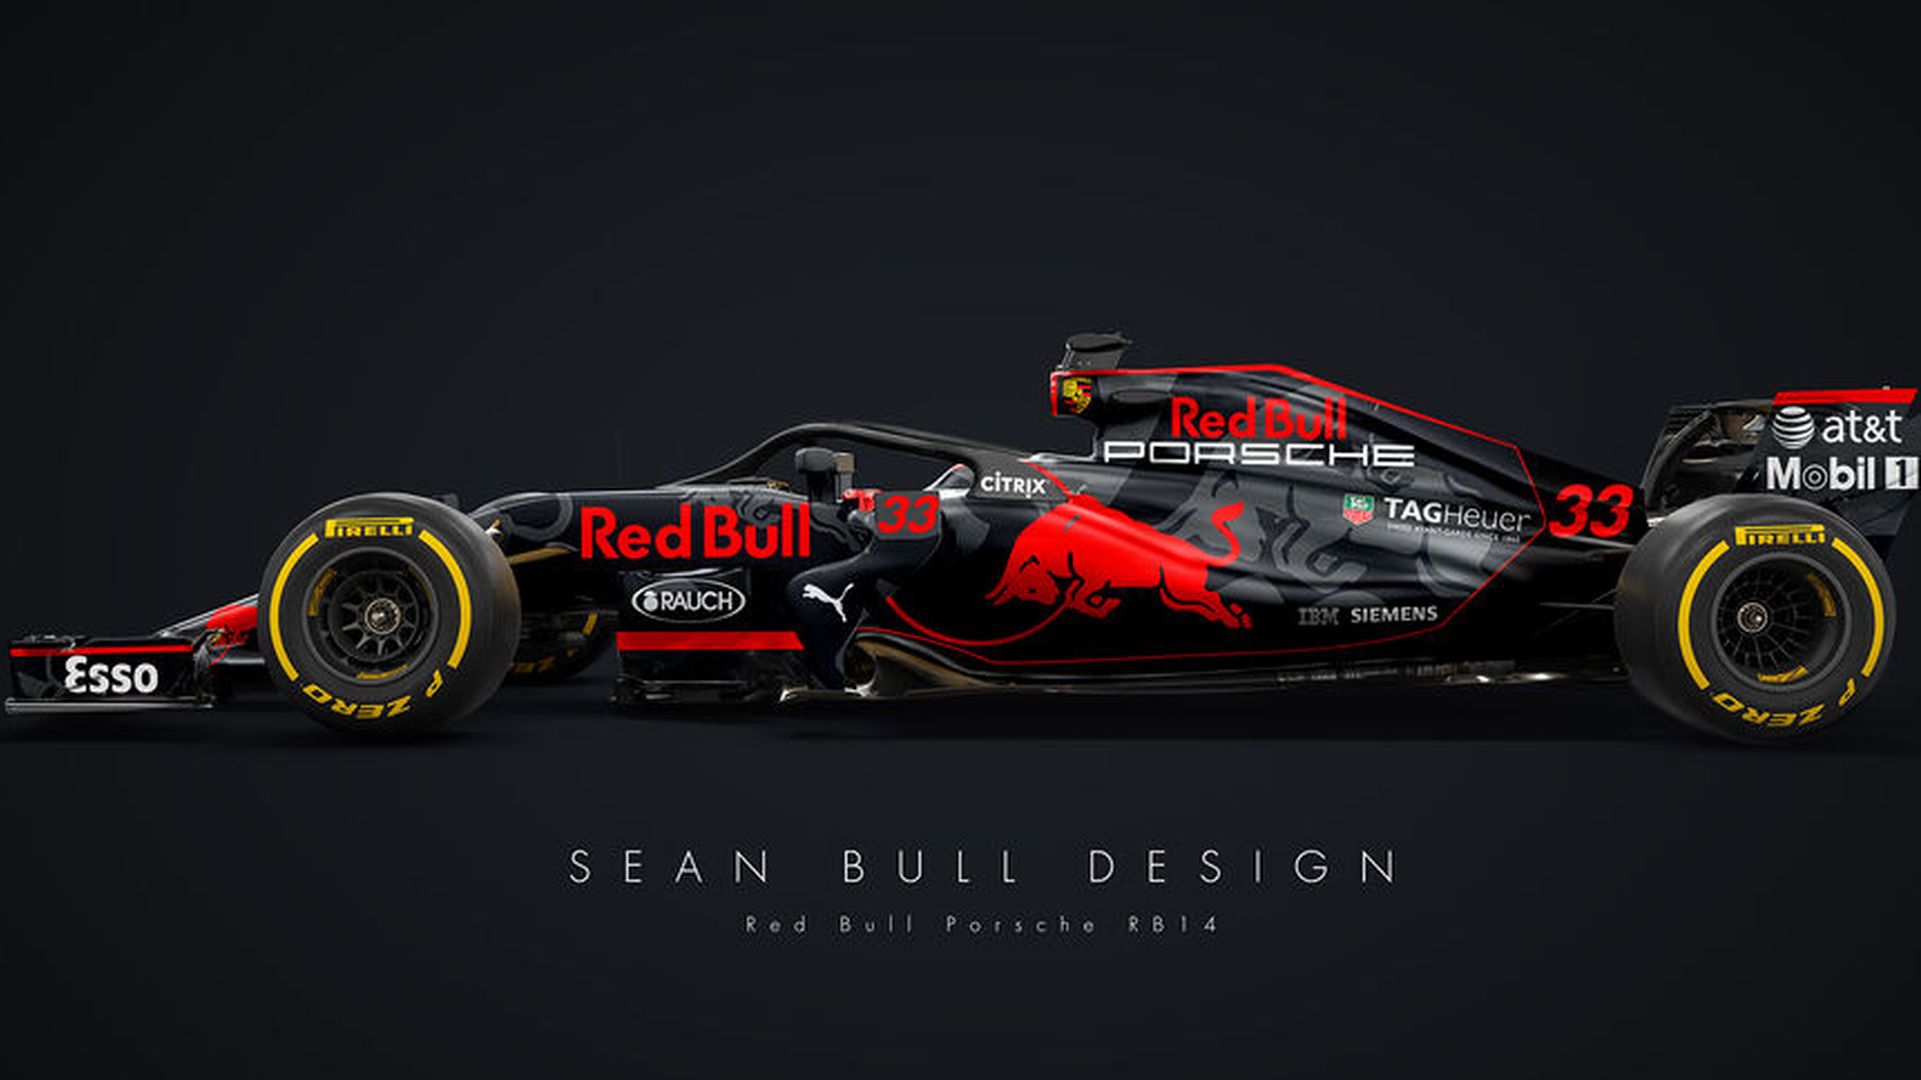 Red Bull Porsche Concept